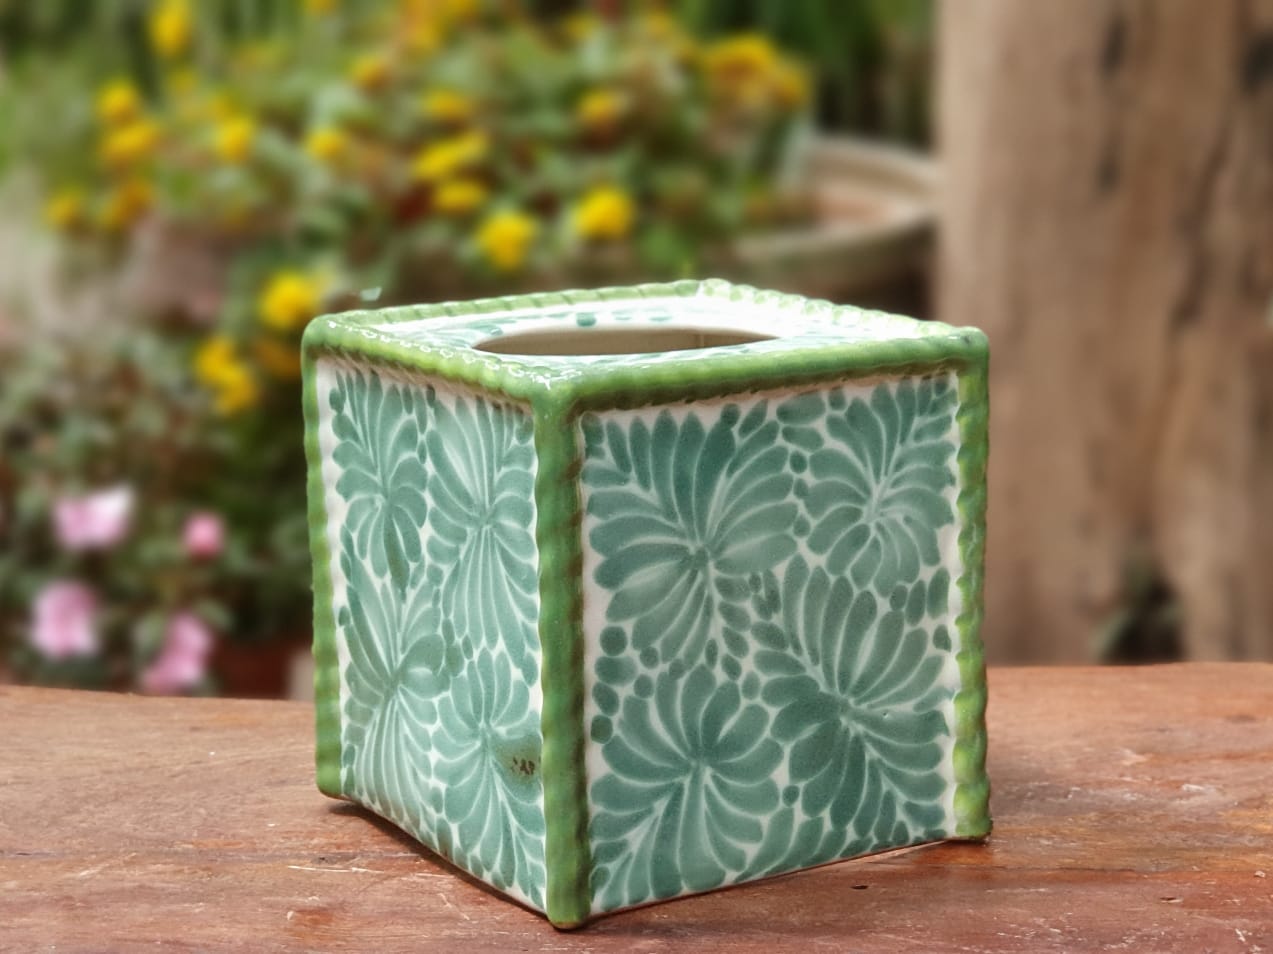 Floral Talavera-Style Ceramic Tissue Box Cover from Mexico